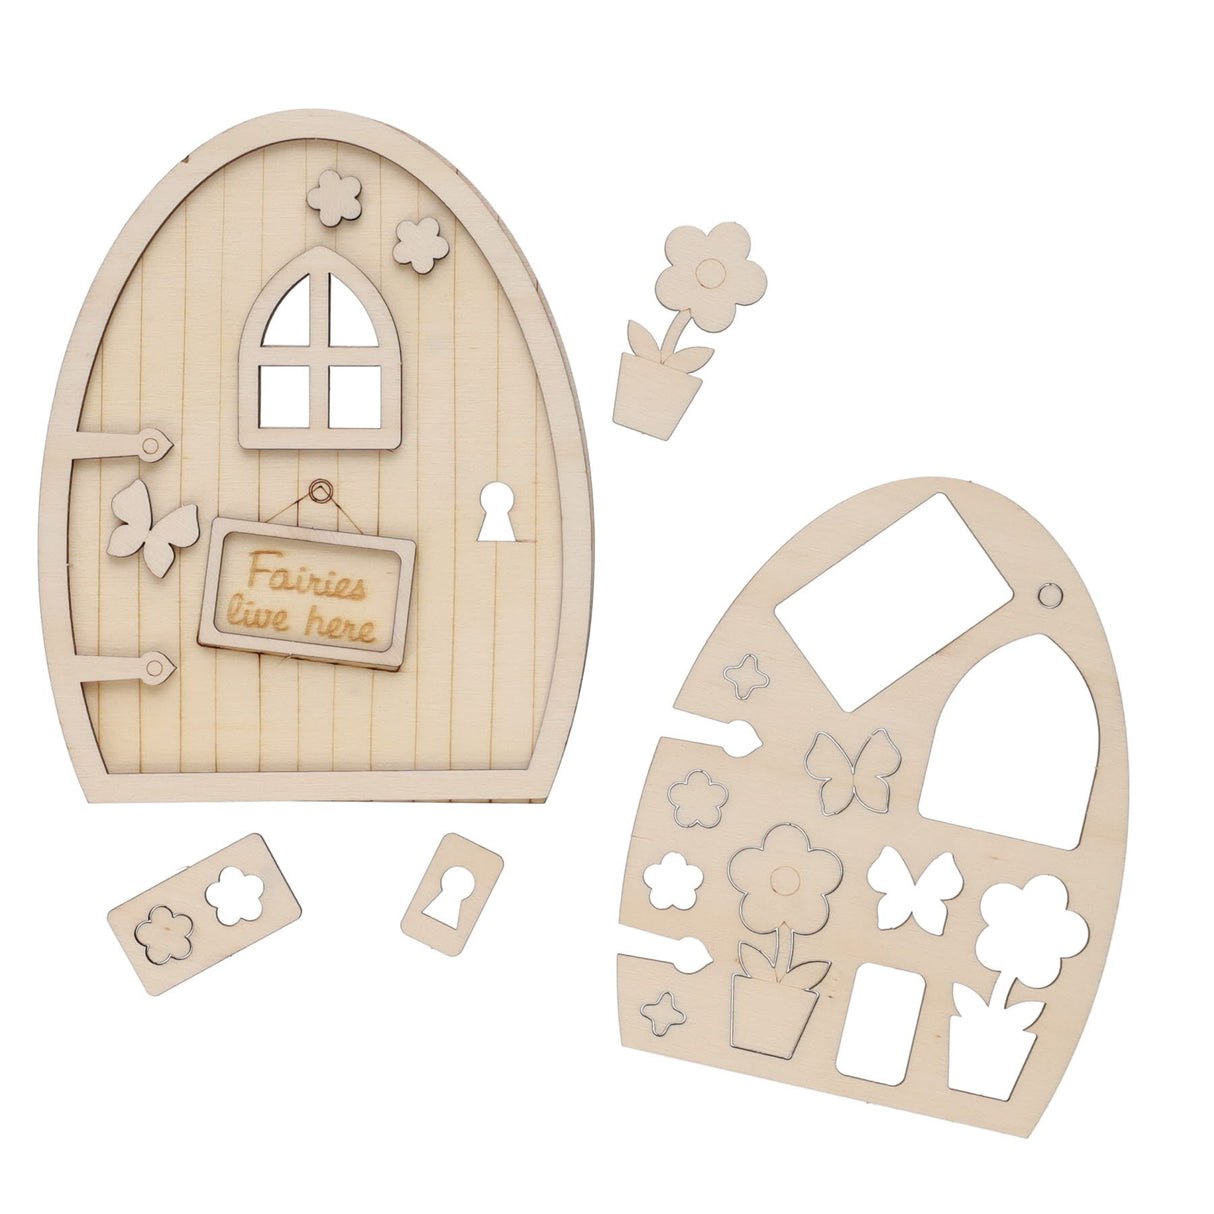 Crafty Bitz 3D Wooden Fairy Door- Fairies Live Here-Kids Art Sets-Crafty Bitz|StationeryShop.co.uk